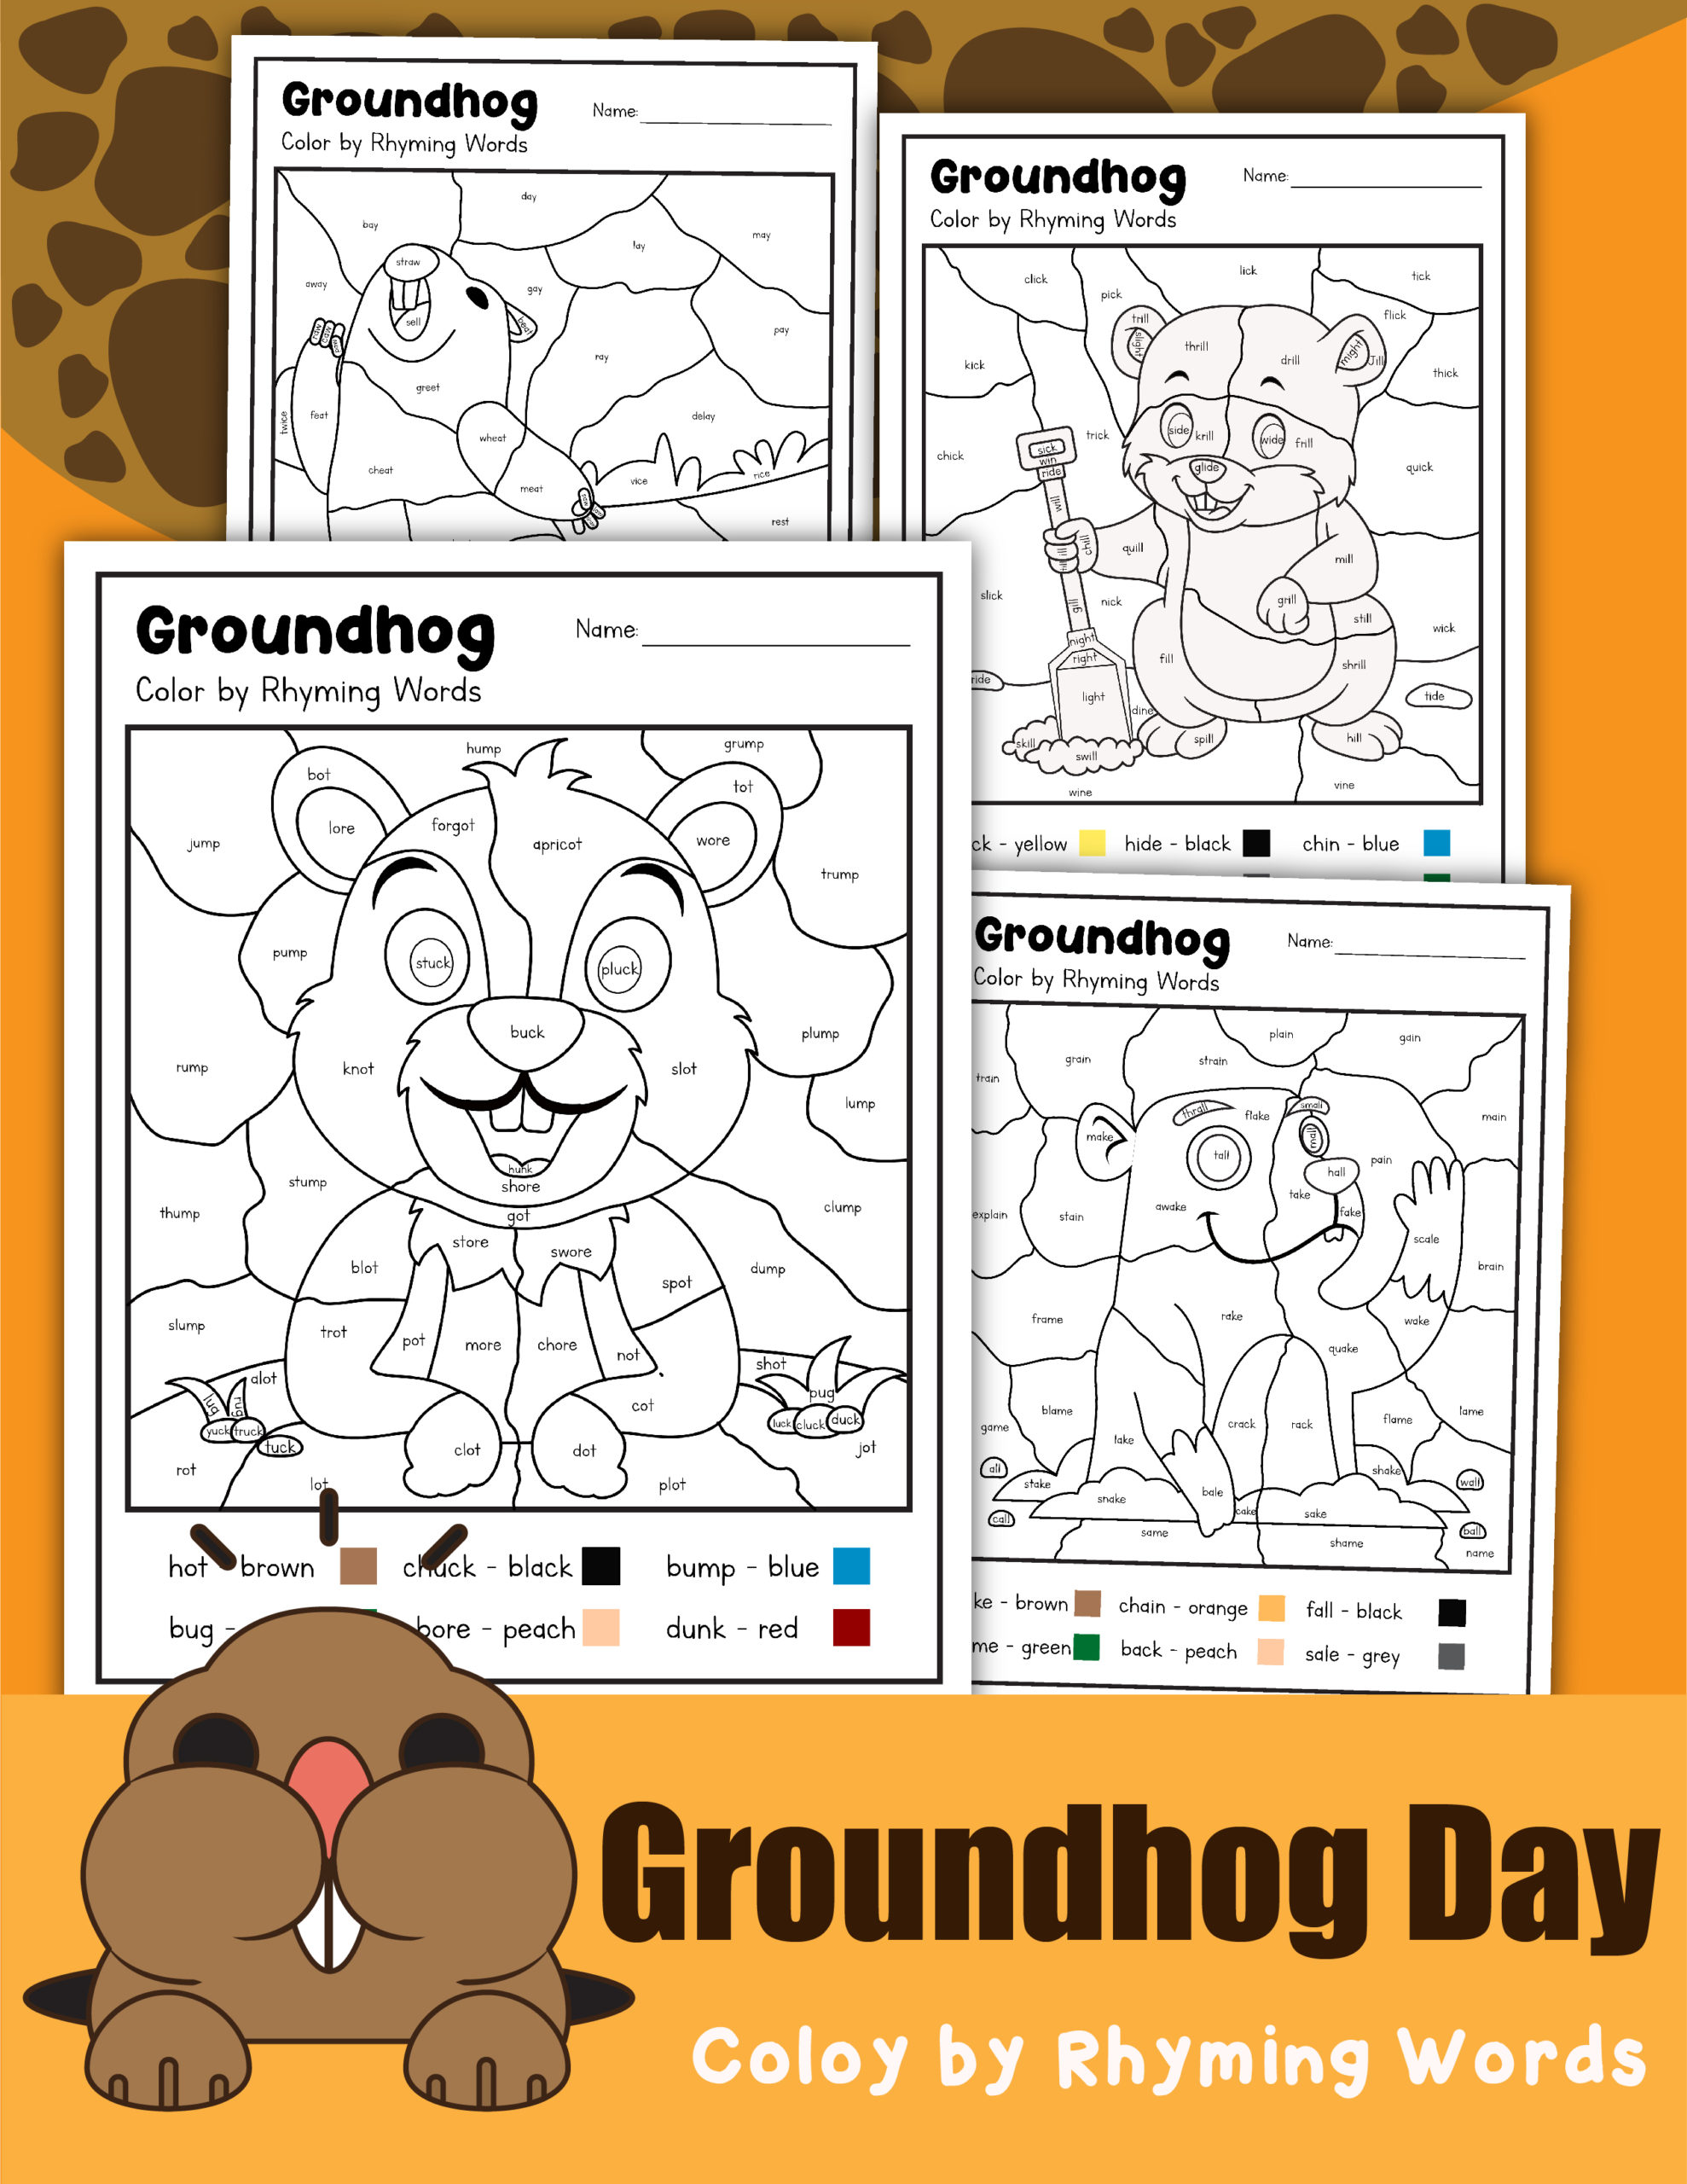 Rhyming Fun on Groundhog Day: Free Color by Rhyming Words Printables